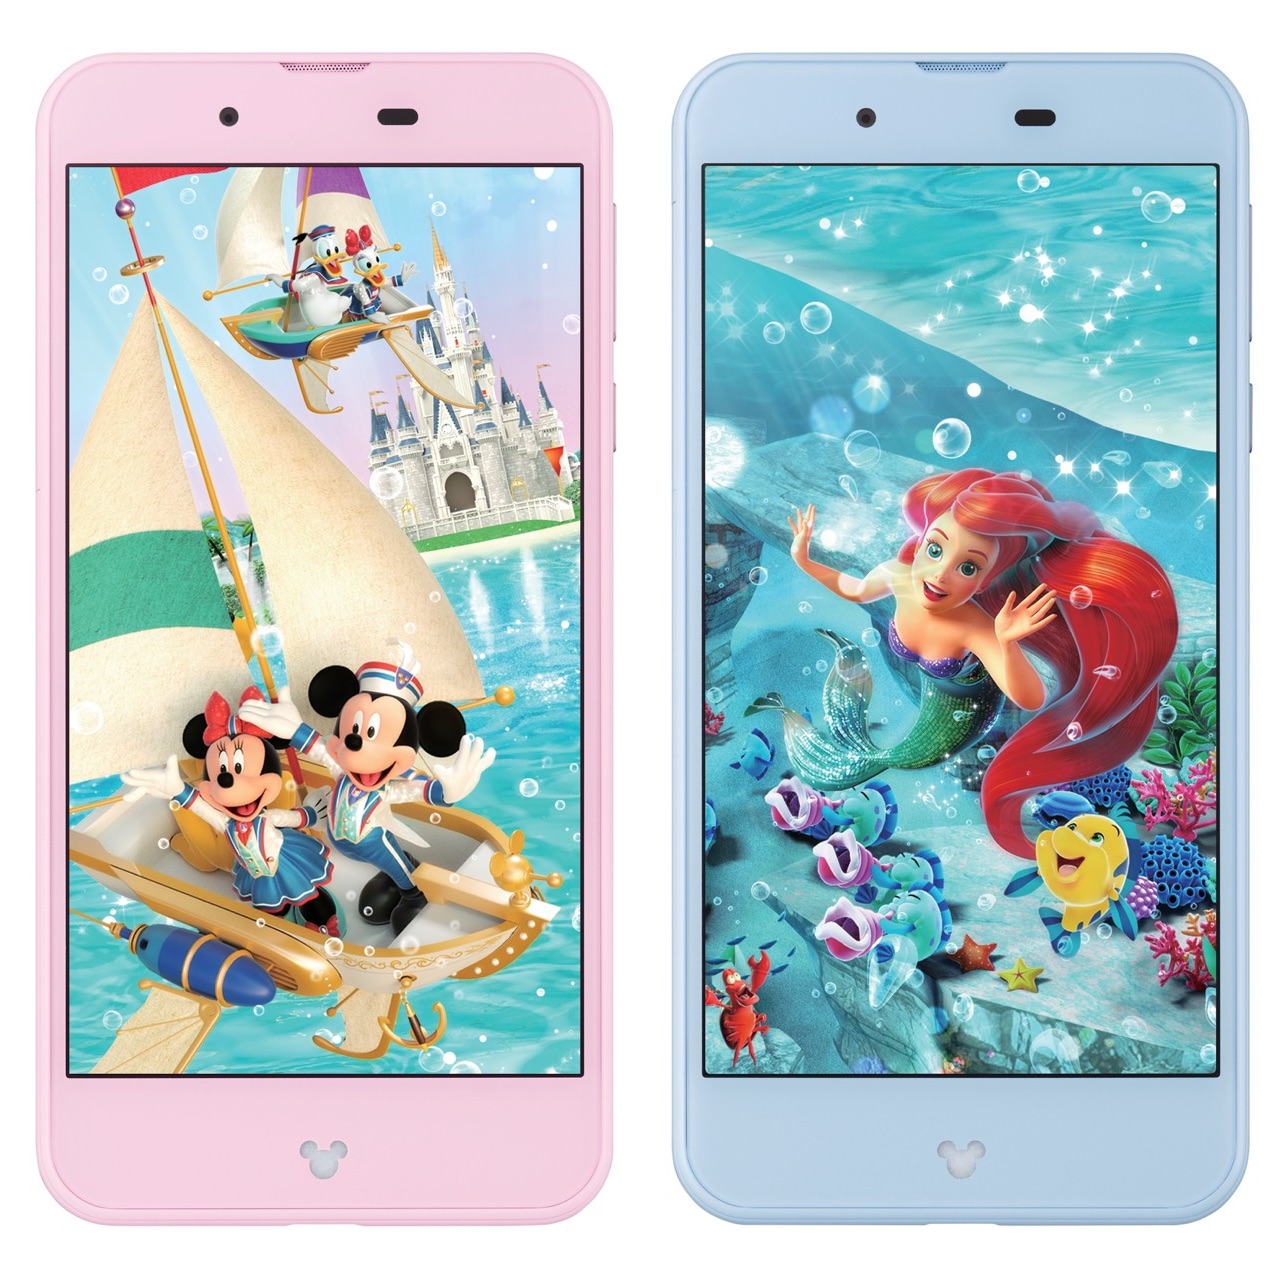 Nttドコモ 最新ディズニースマホ Disney Mobile On Docomo Dm 01j を発表 水の世界をイメージし スワロフスキー クリスタルが輝くオリジナルカバーが同梱 S Max